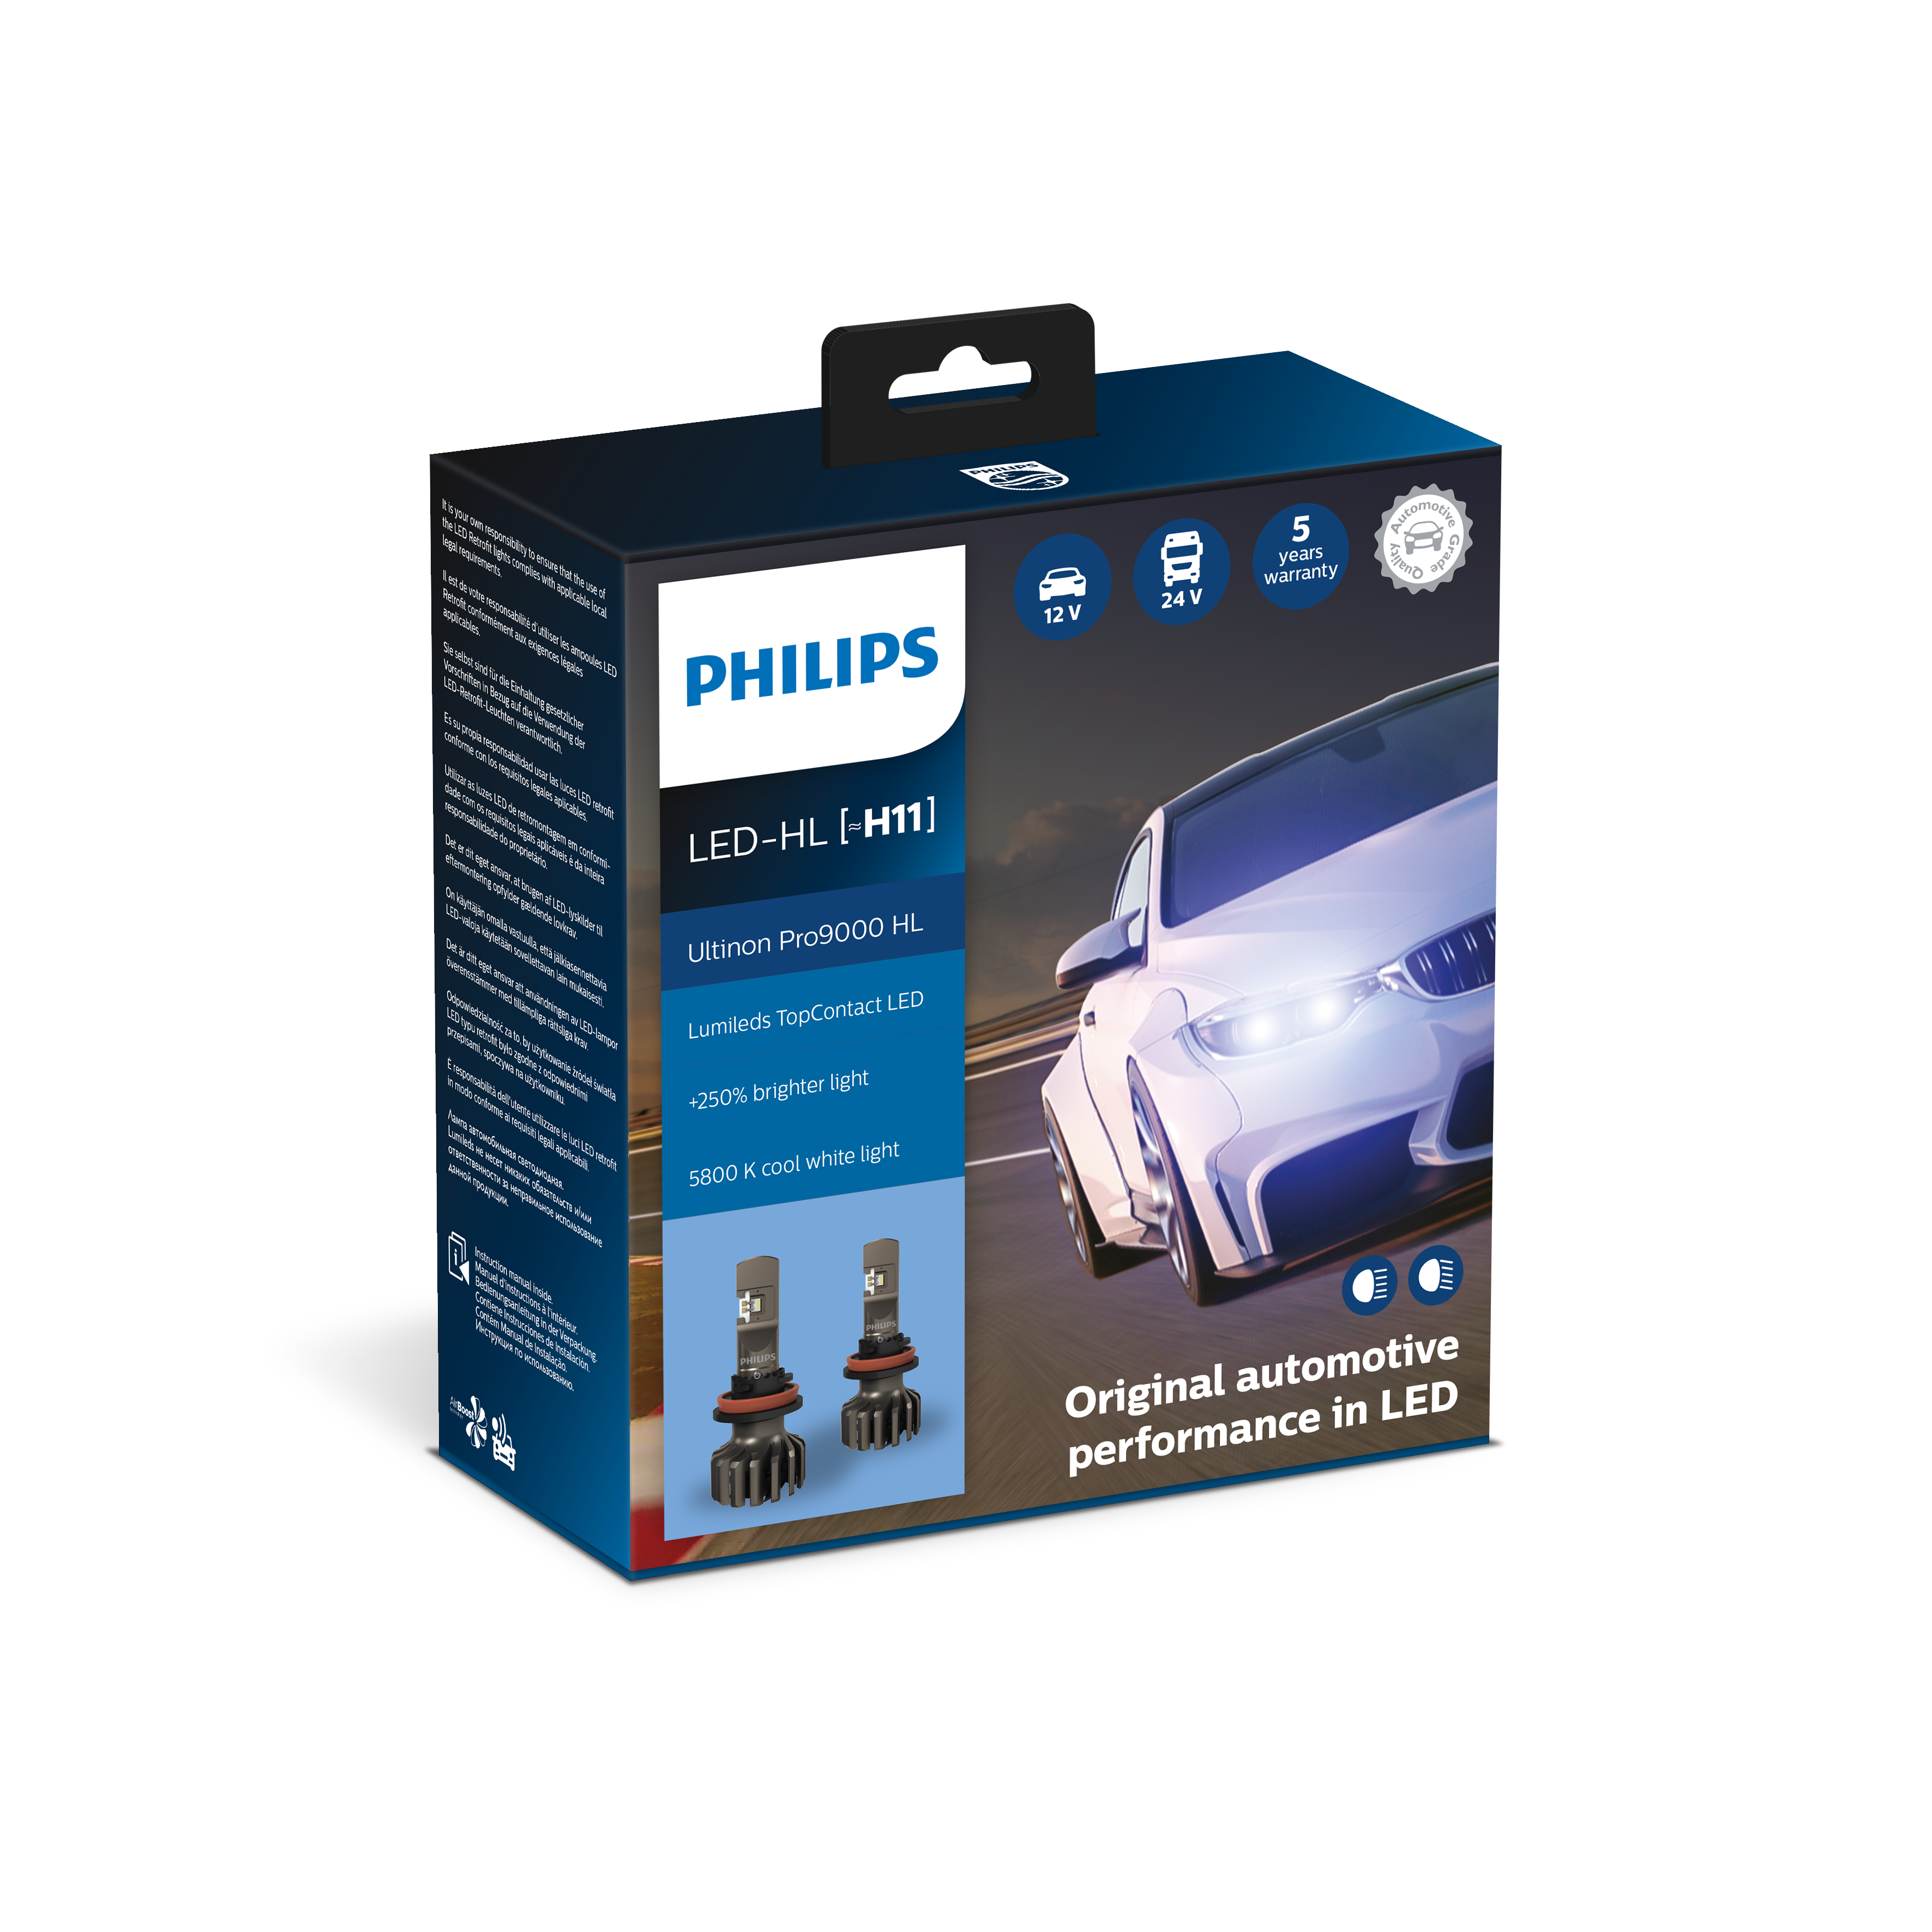 Светодиодные филипс купить. Philips Ultinon 9000 h7. Philips Ultinon pro9000. Лампа автомобильная Philips Ultinon pro9000 hl led h7. Philips Ultinon pro9000 h1.